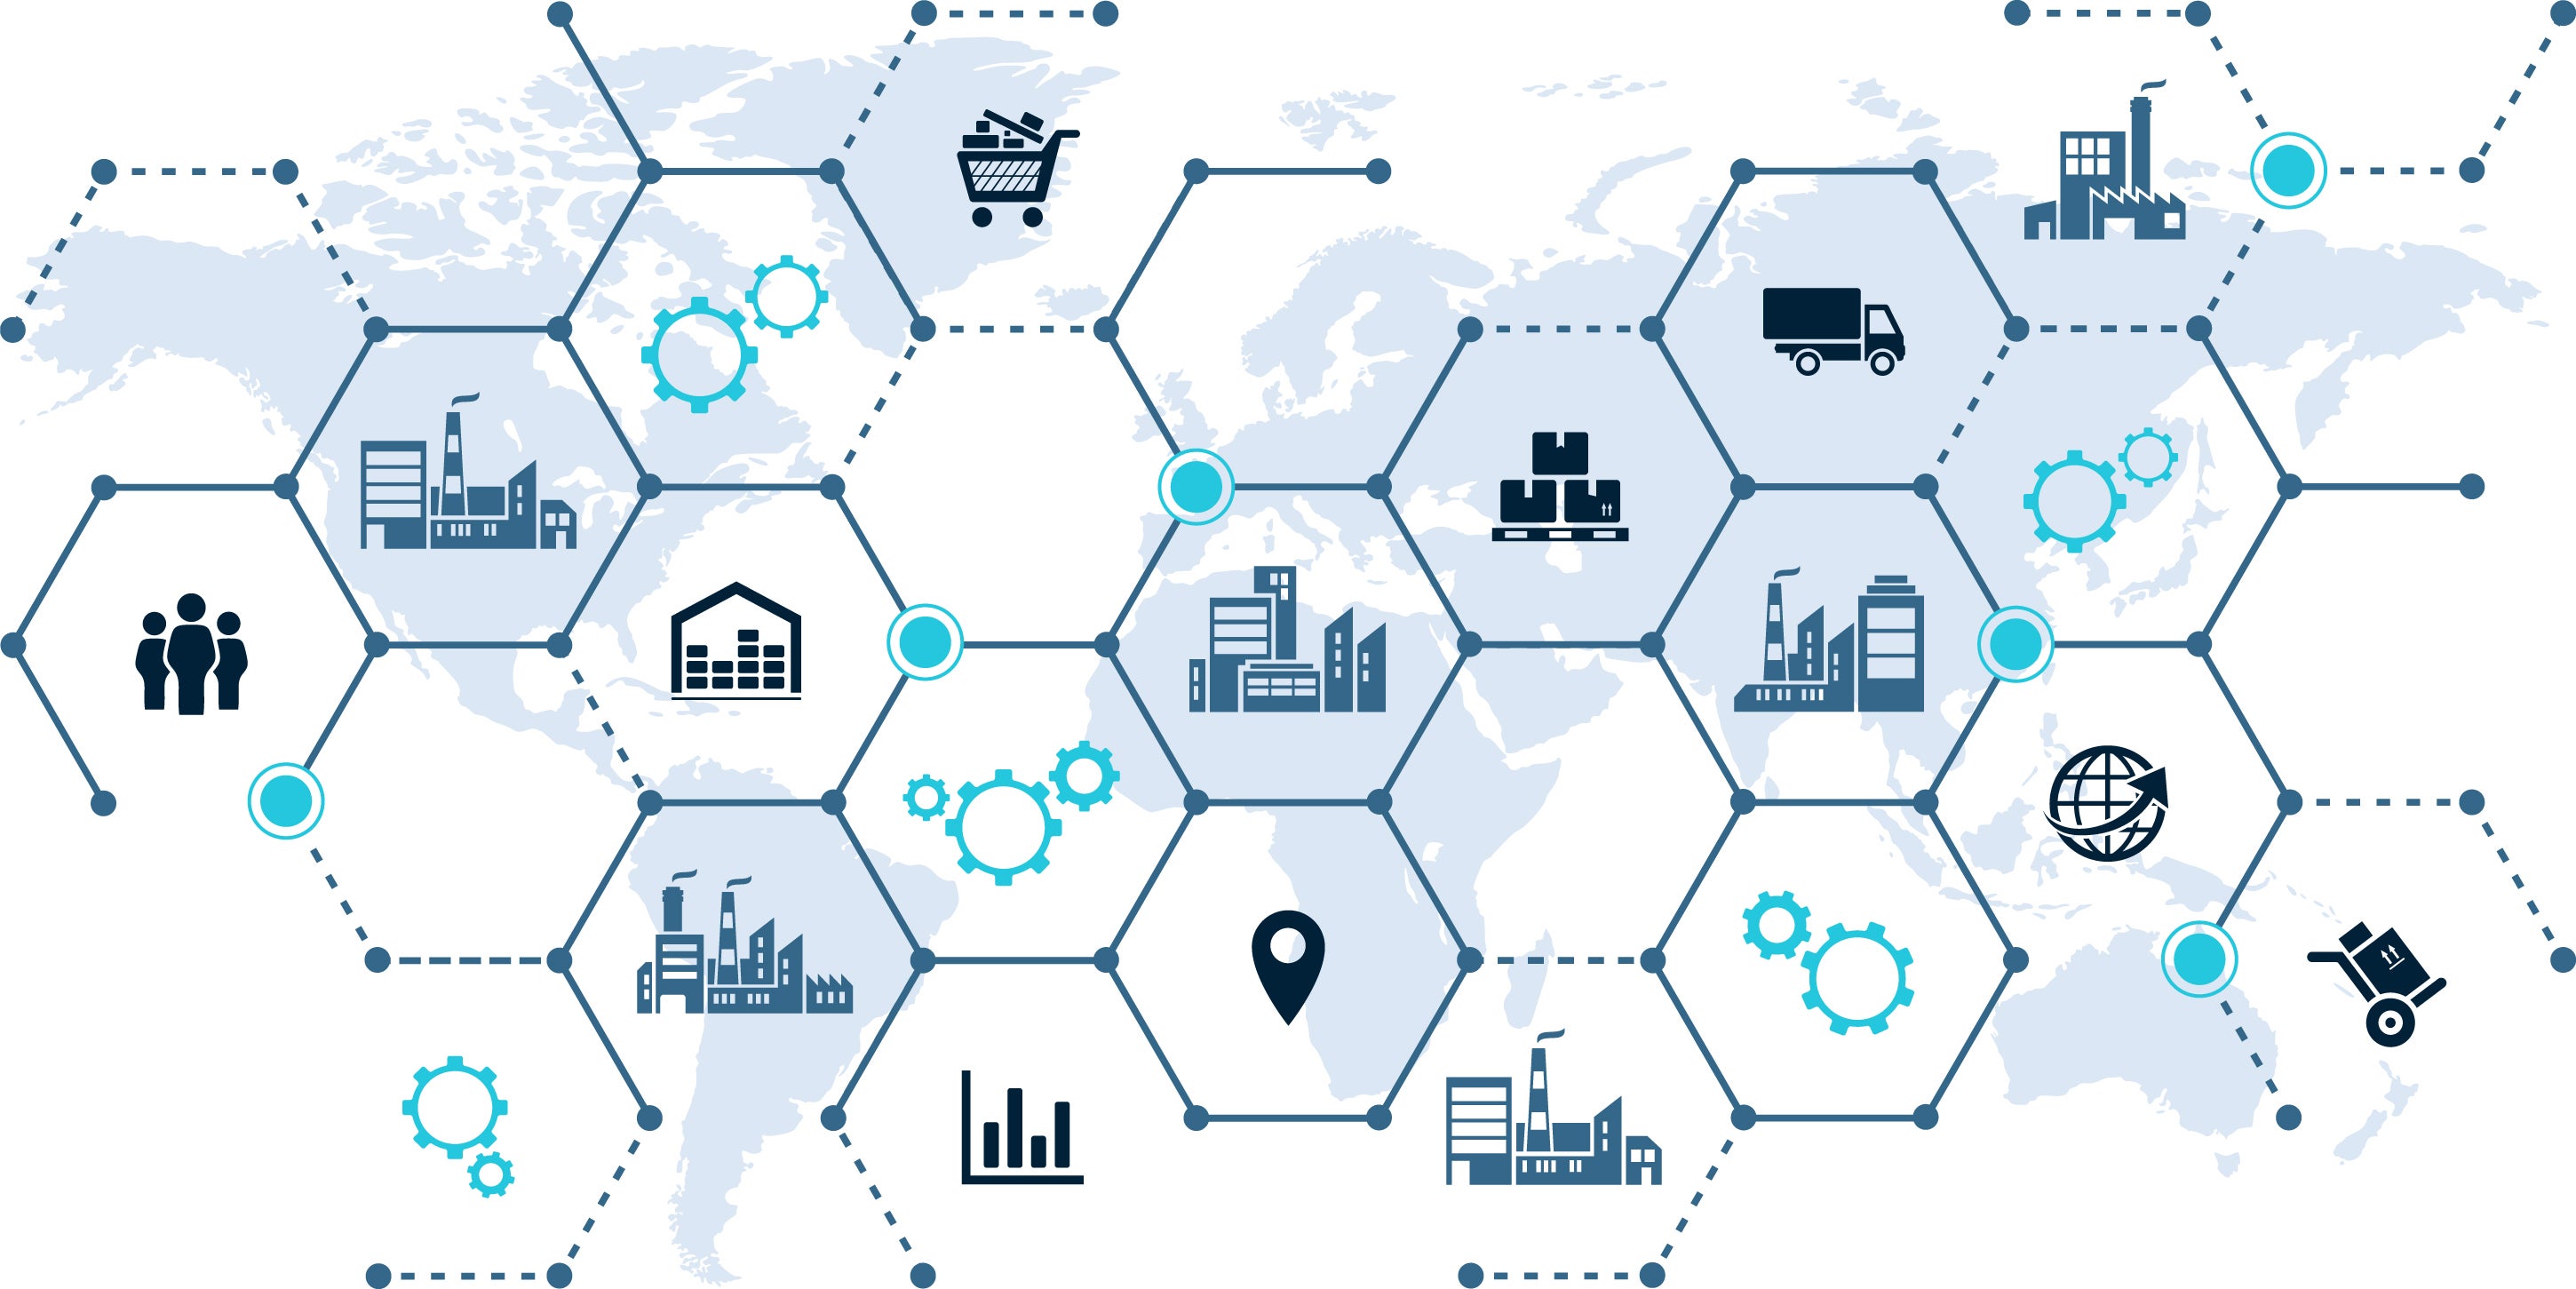 global company network - growth, trade & logistics - vector illustration